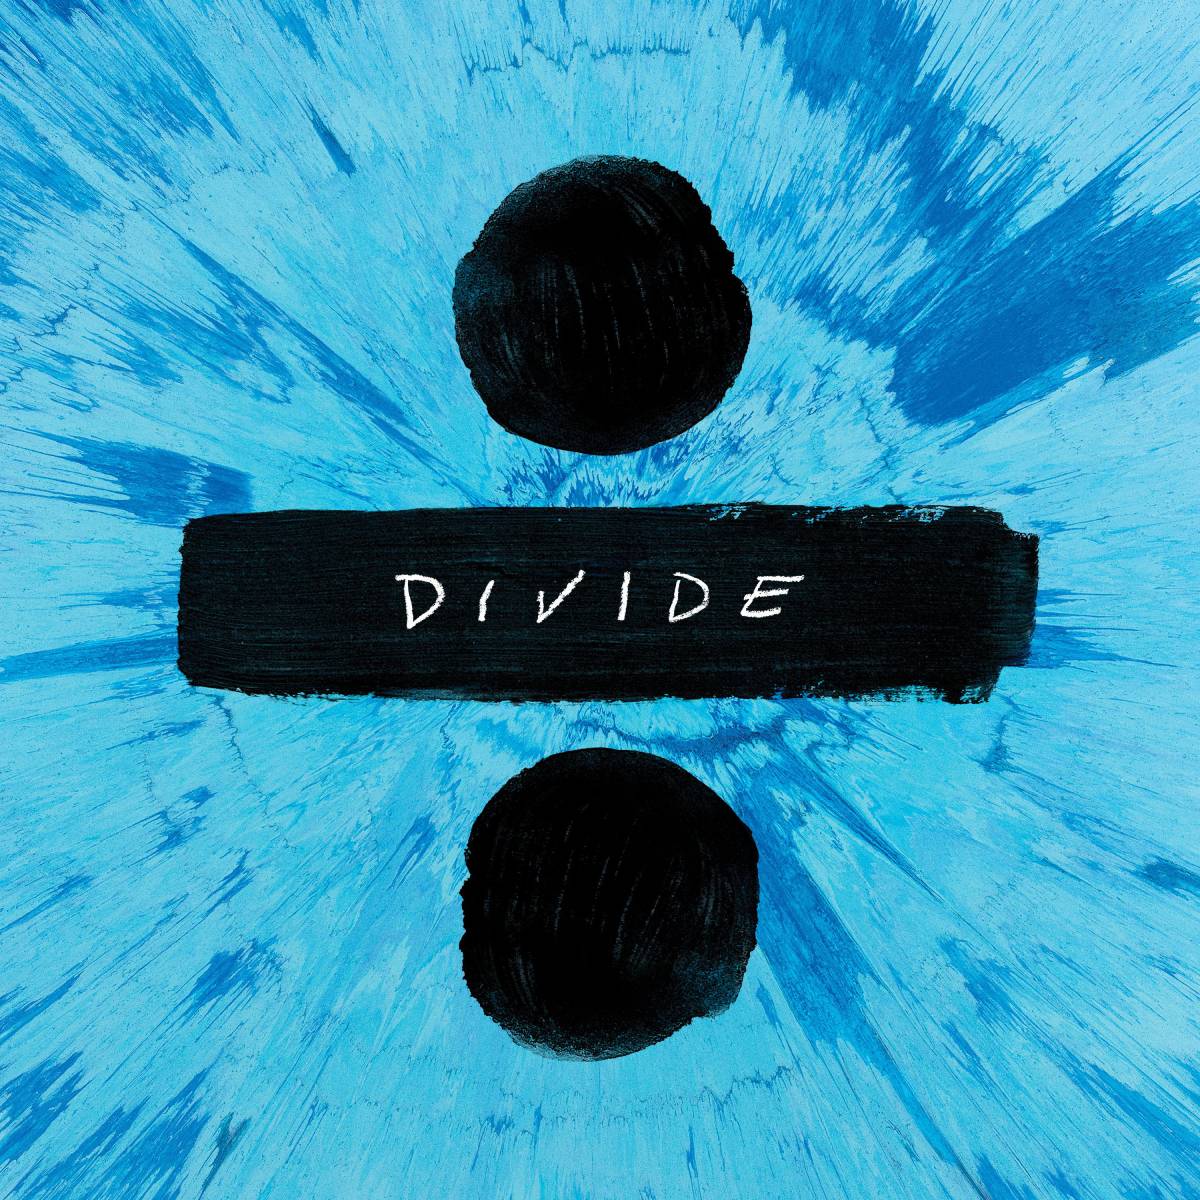 Divide (das dritte Album von Ed Sheeran)